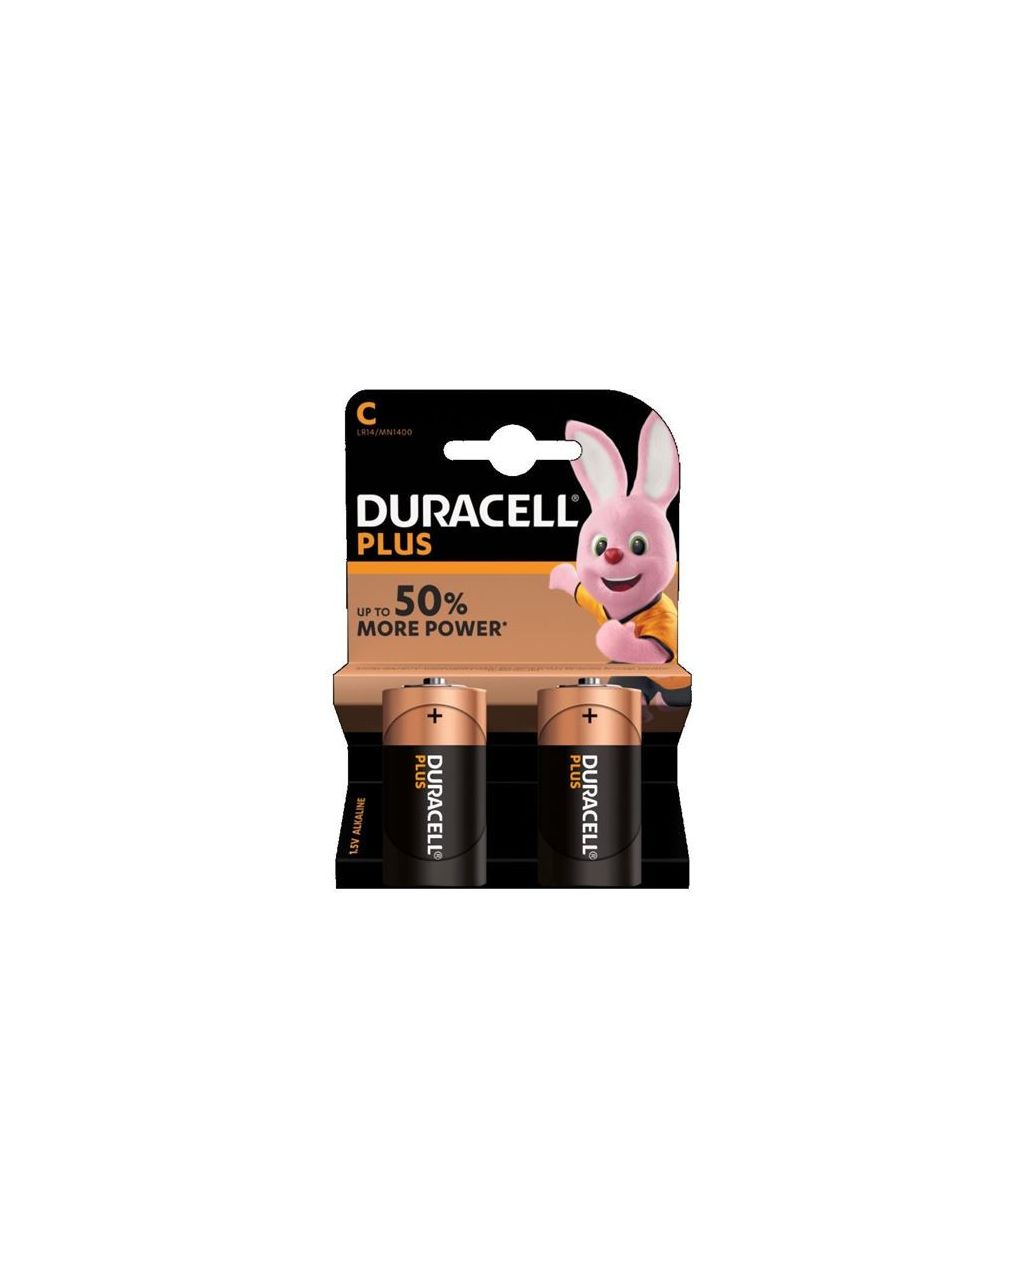 Duracell - plus power mezza torcia - Duracell